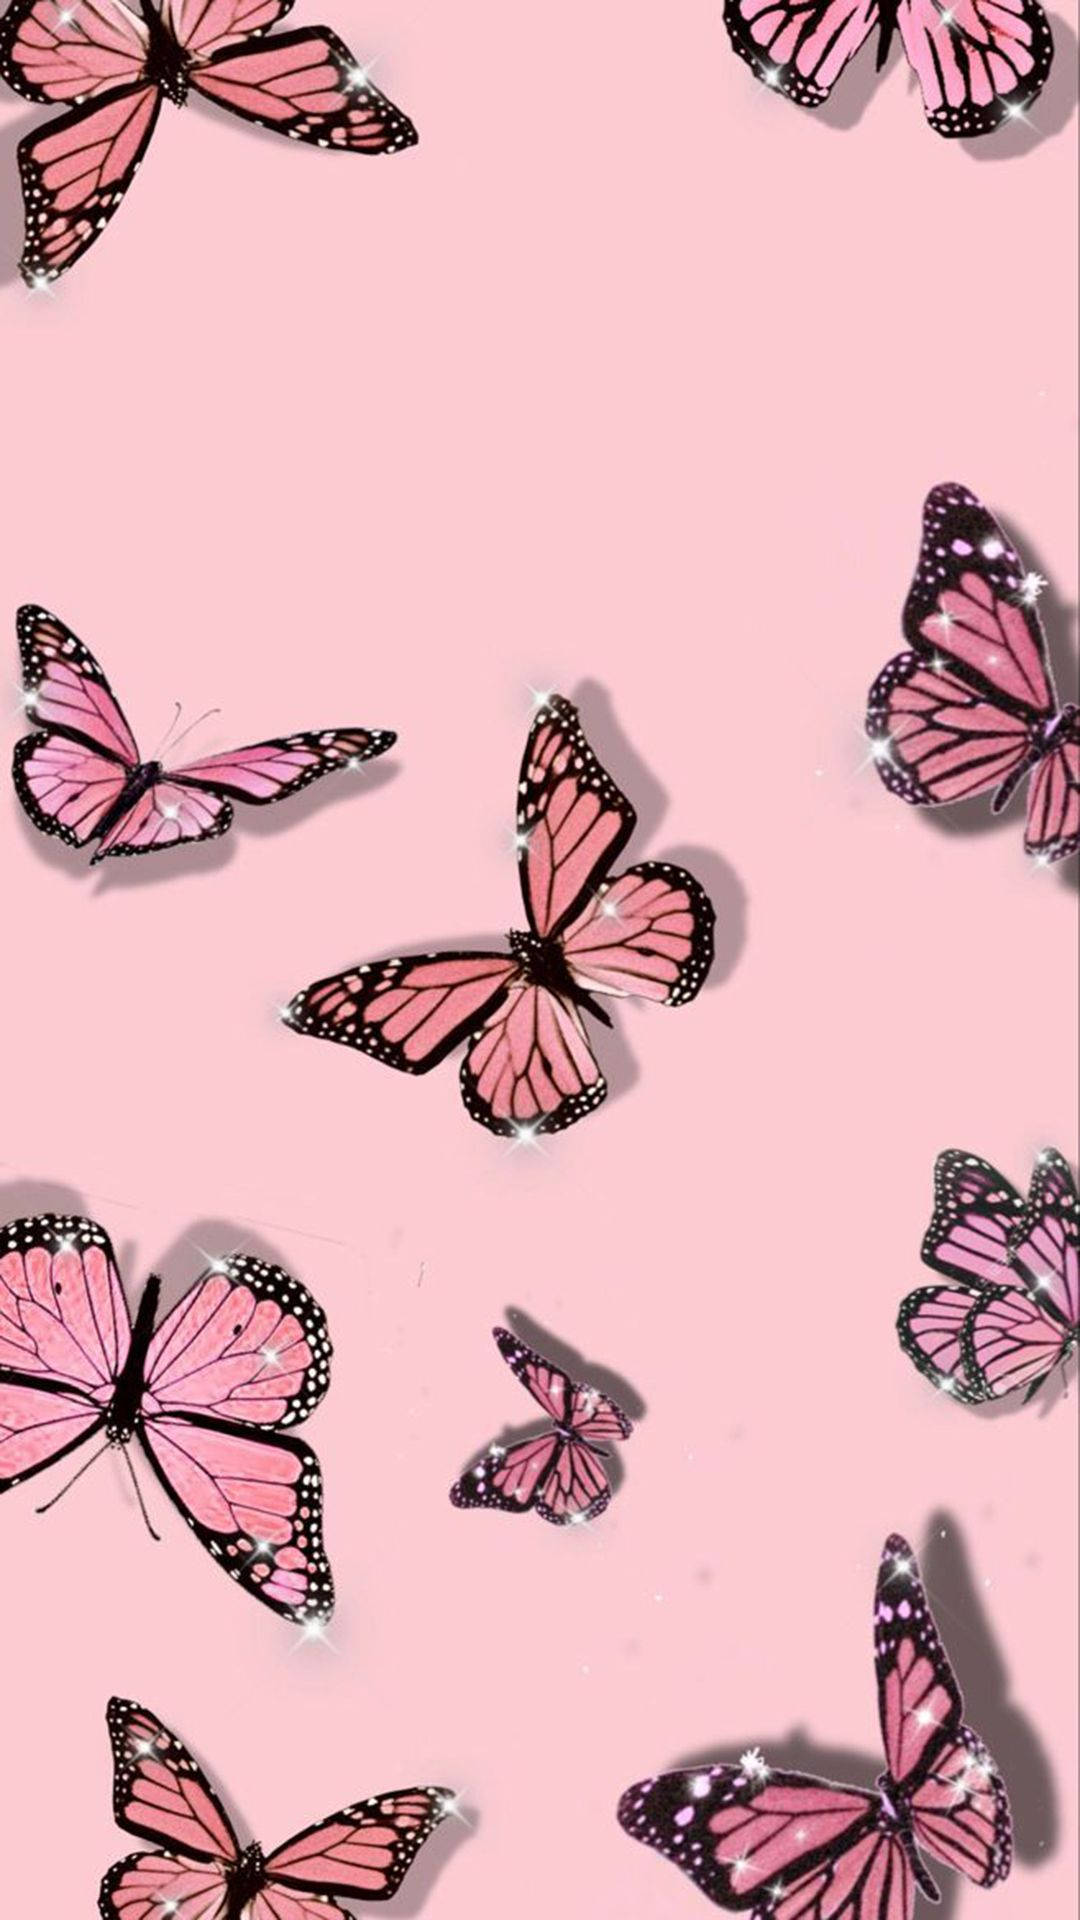 Flying Butterflies On Aesthetic Pink Wallpaper